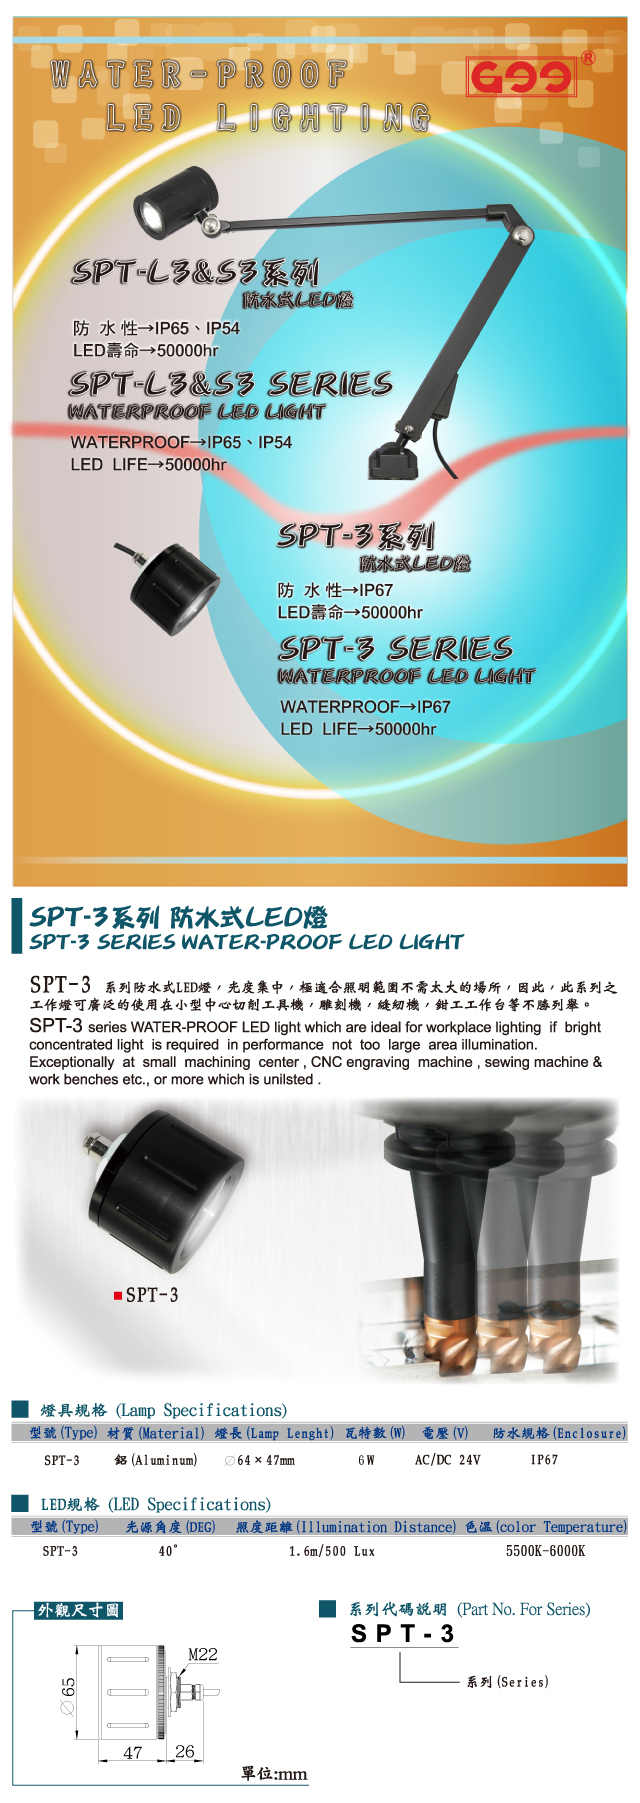 SPT-3 series water-proof LED light